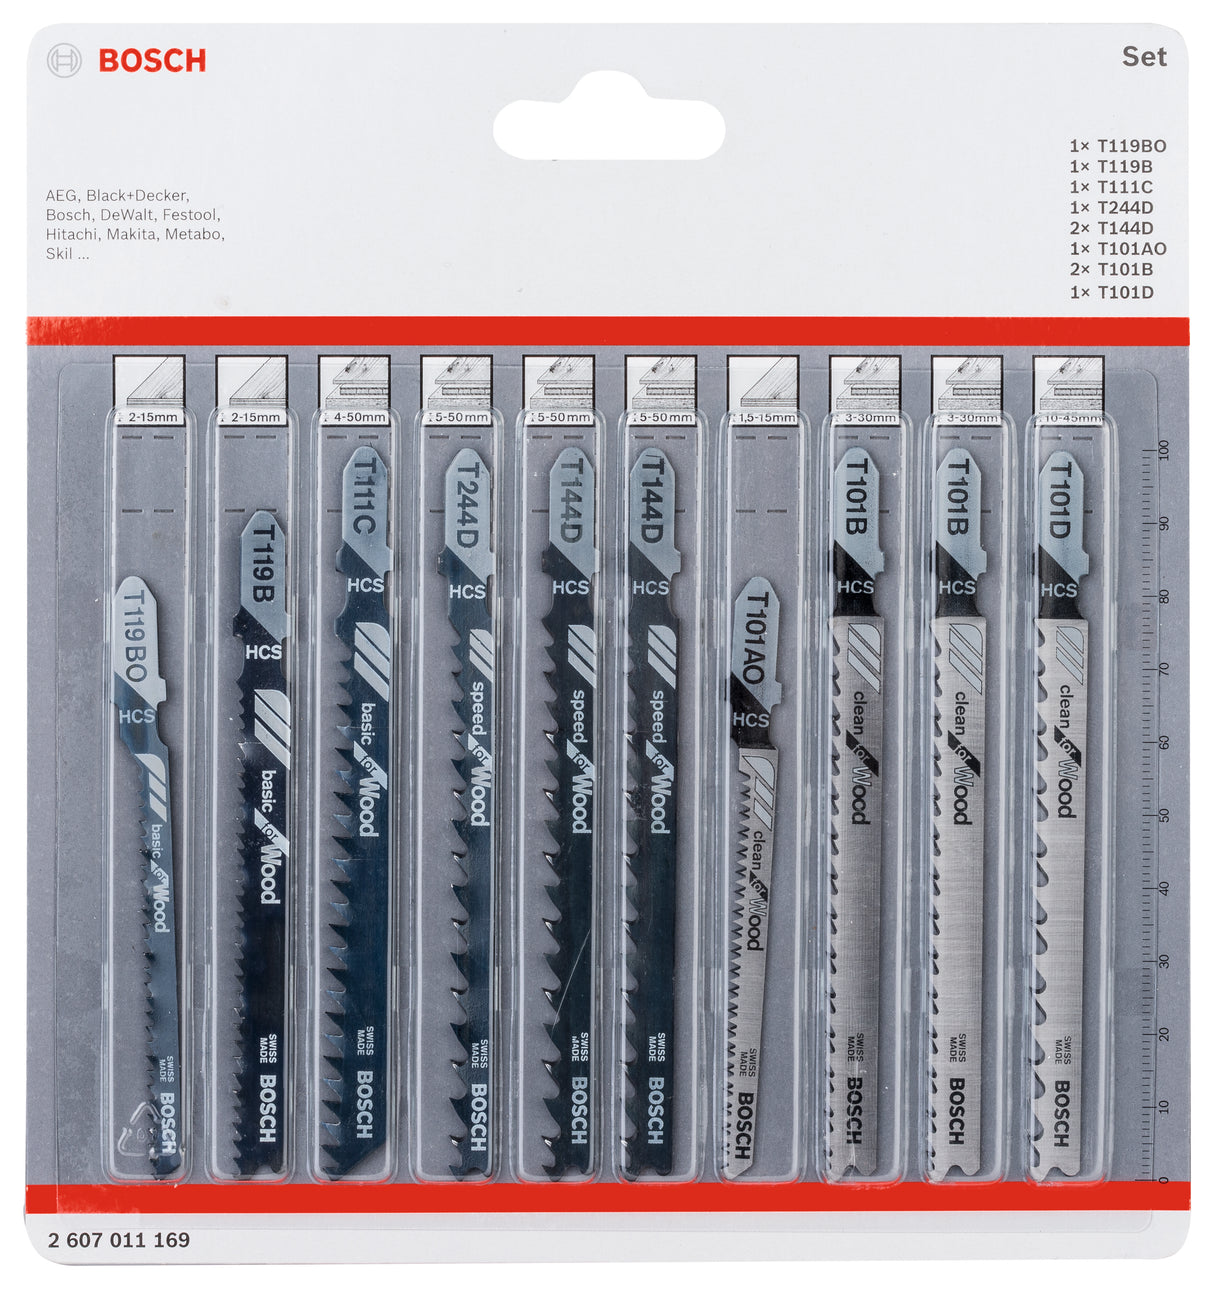 Bosch Professional 10pc Jigsaw Blade Set for Woodworking